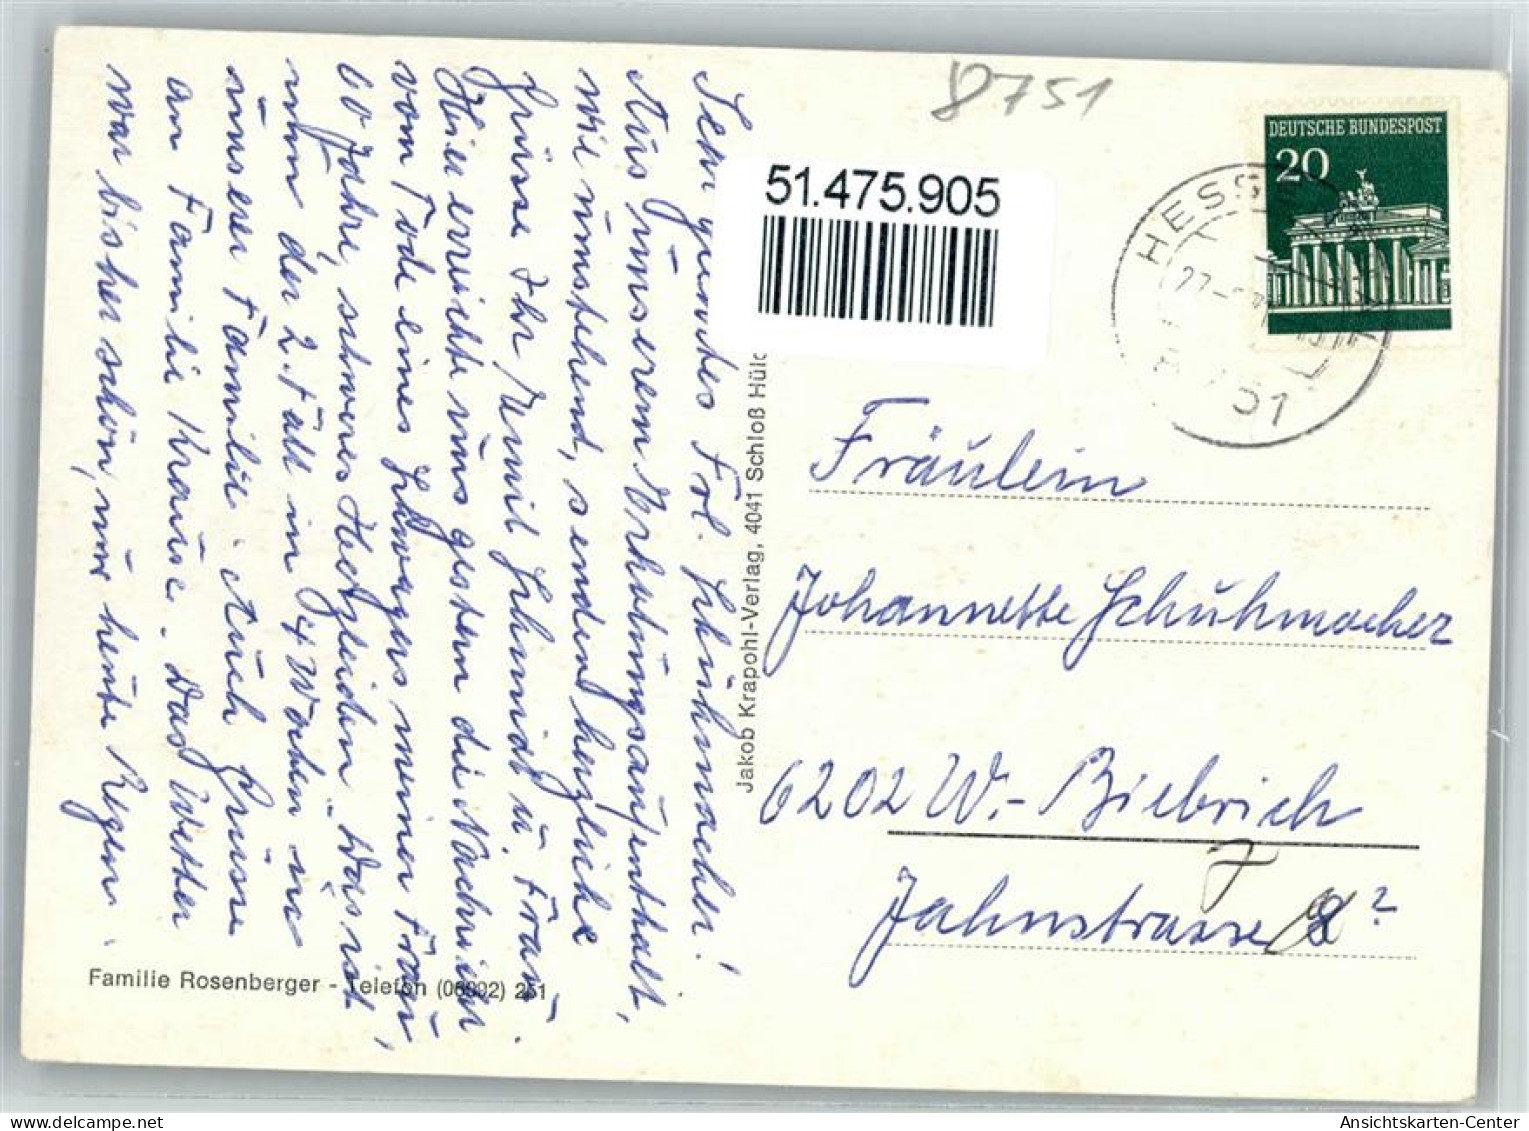 51475905 - Hessenthal - Aschaffenburg